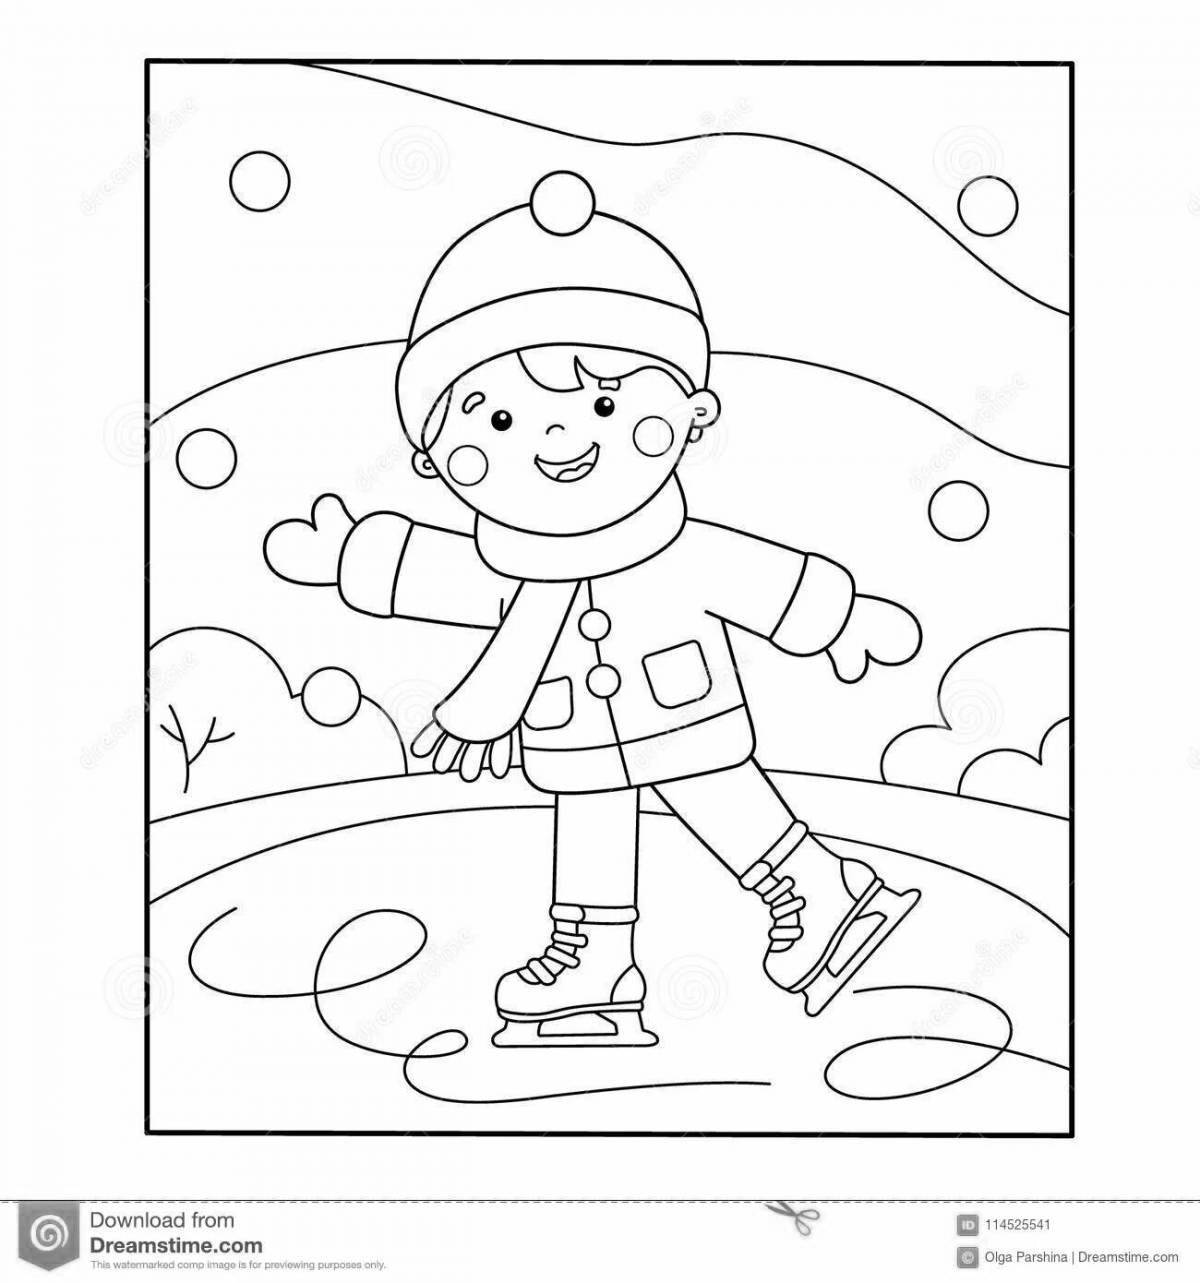 Fun winter coloring for preschoolers